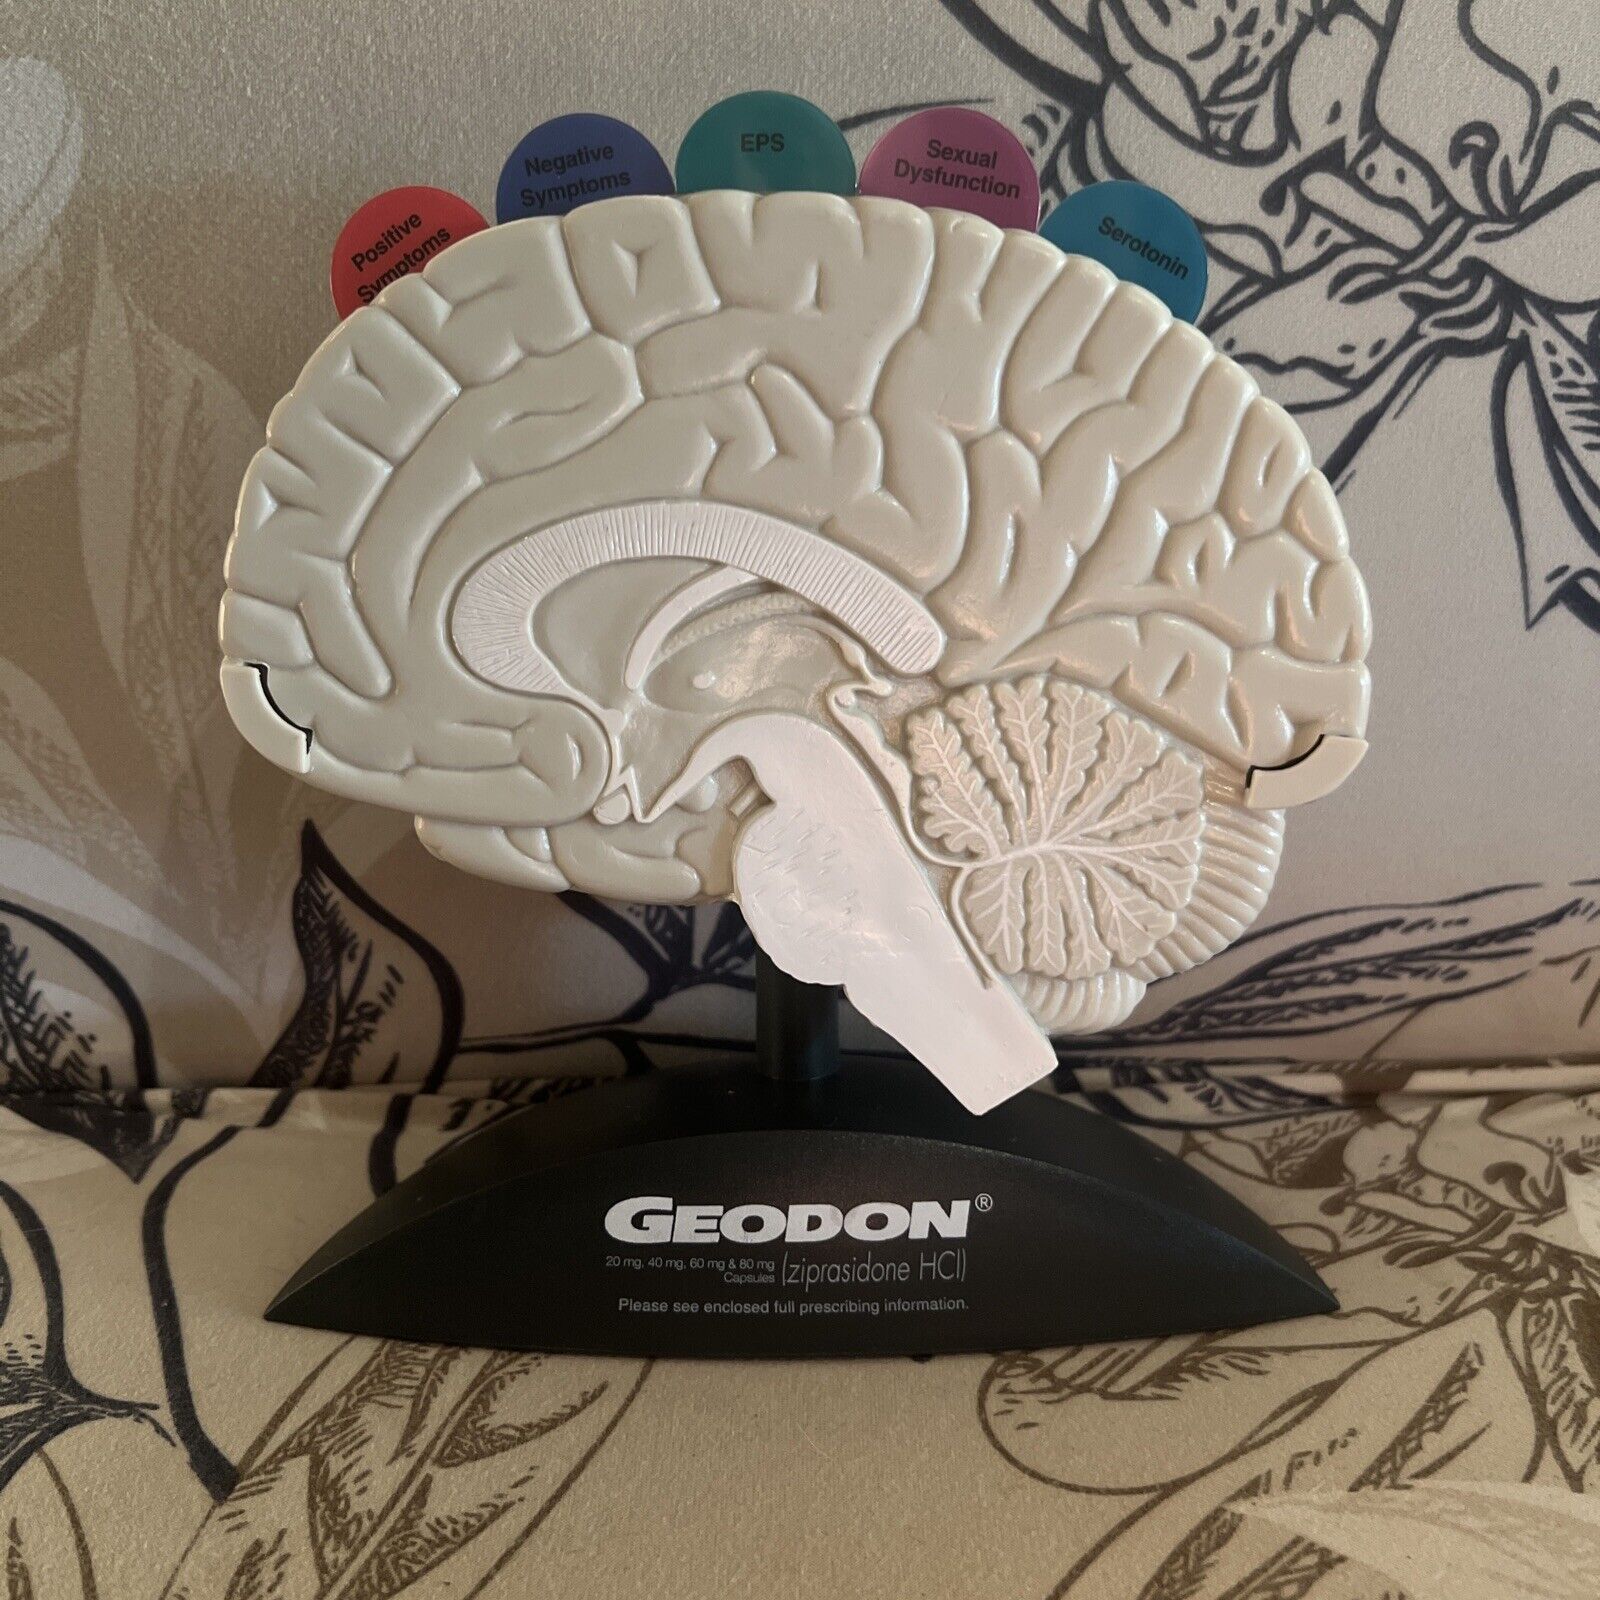 Geodon Brain Anatomical Model - Pharmaceutical Collectible - PFIZER 2003